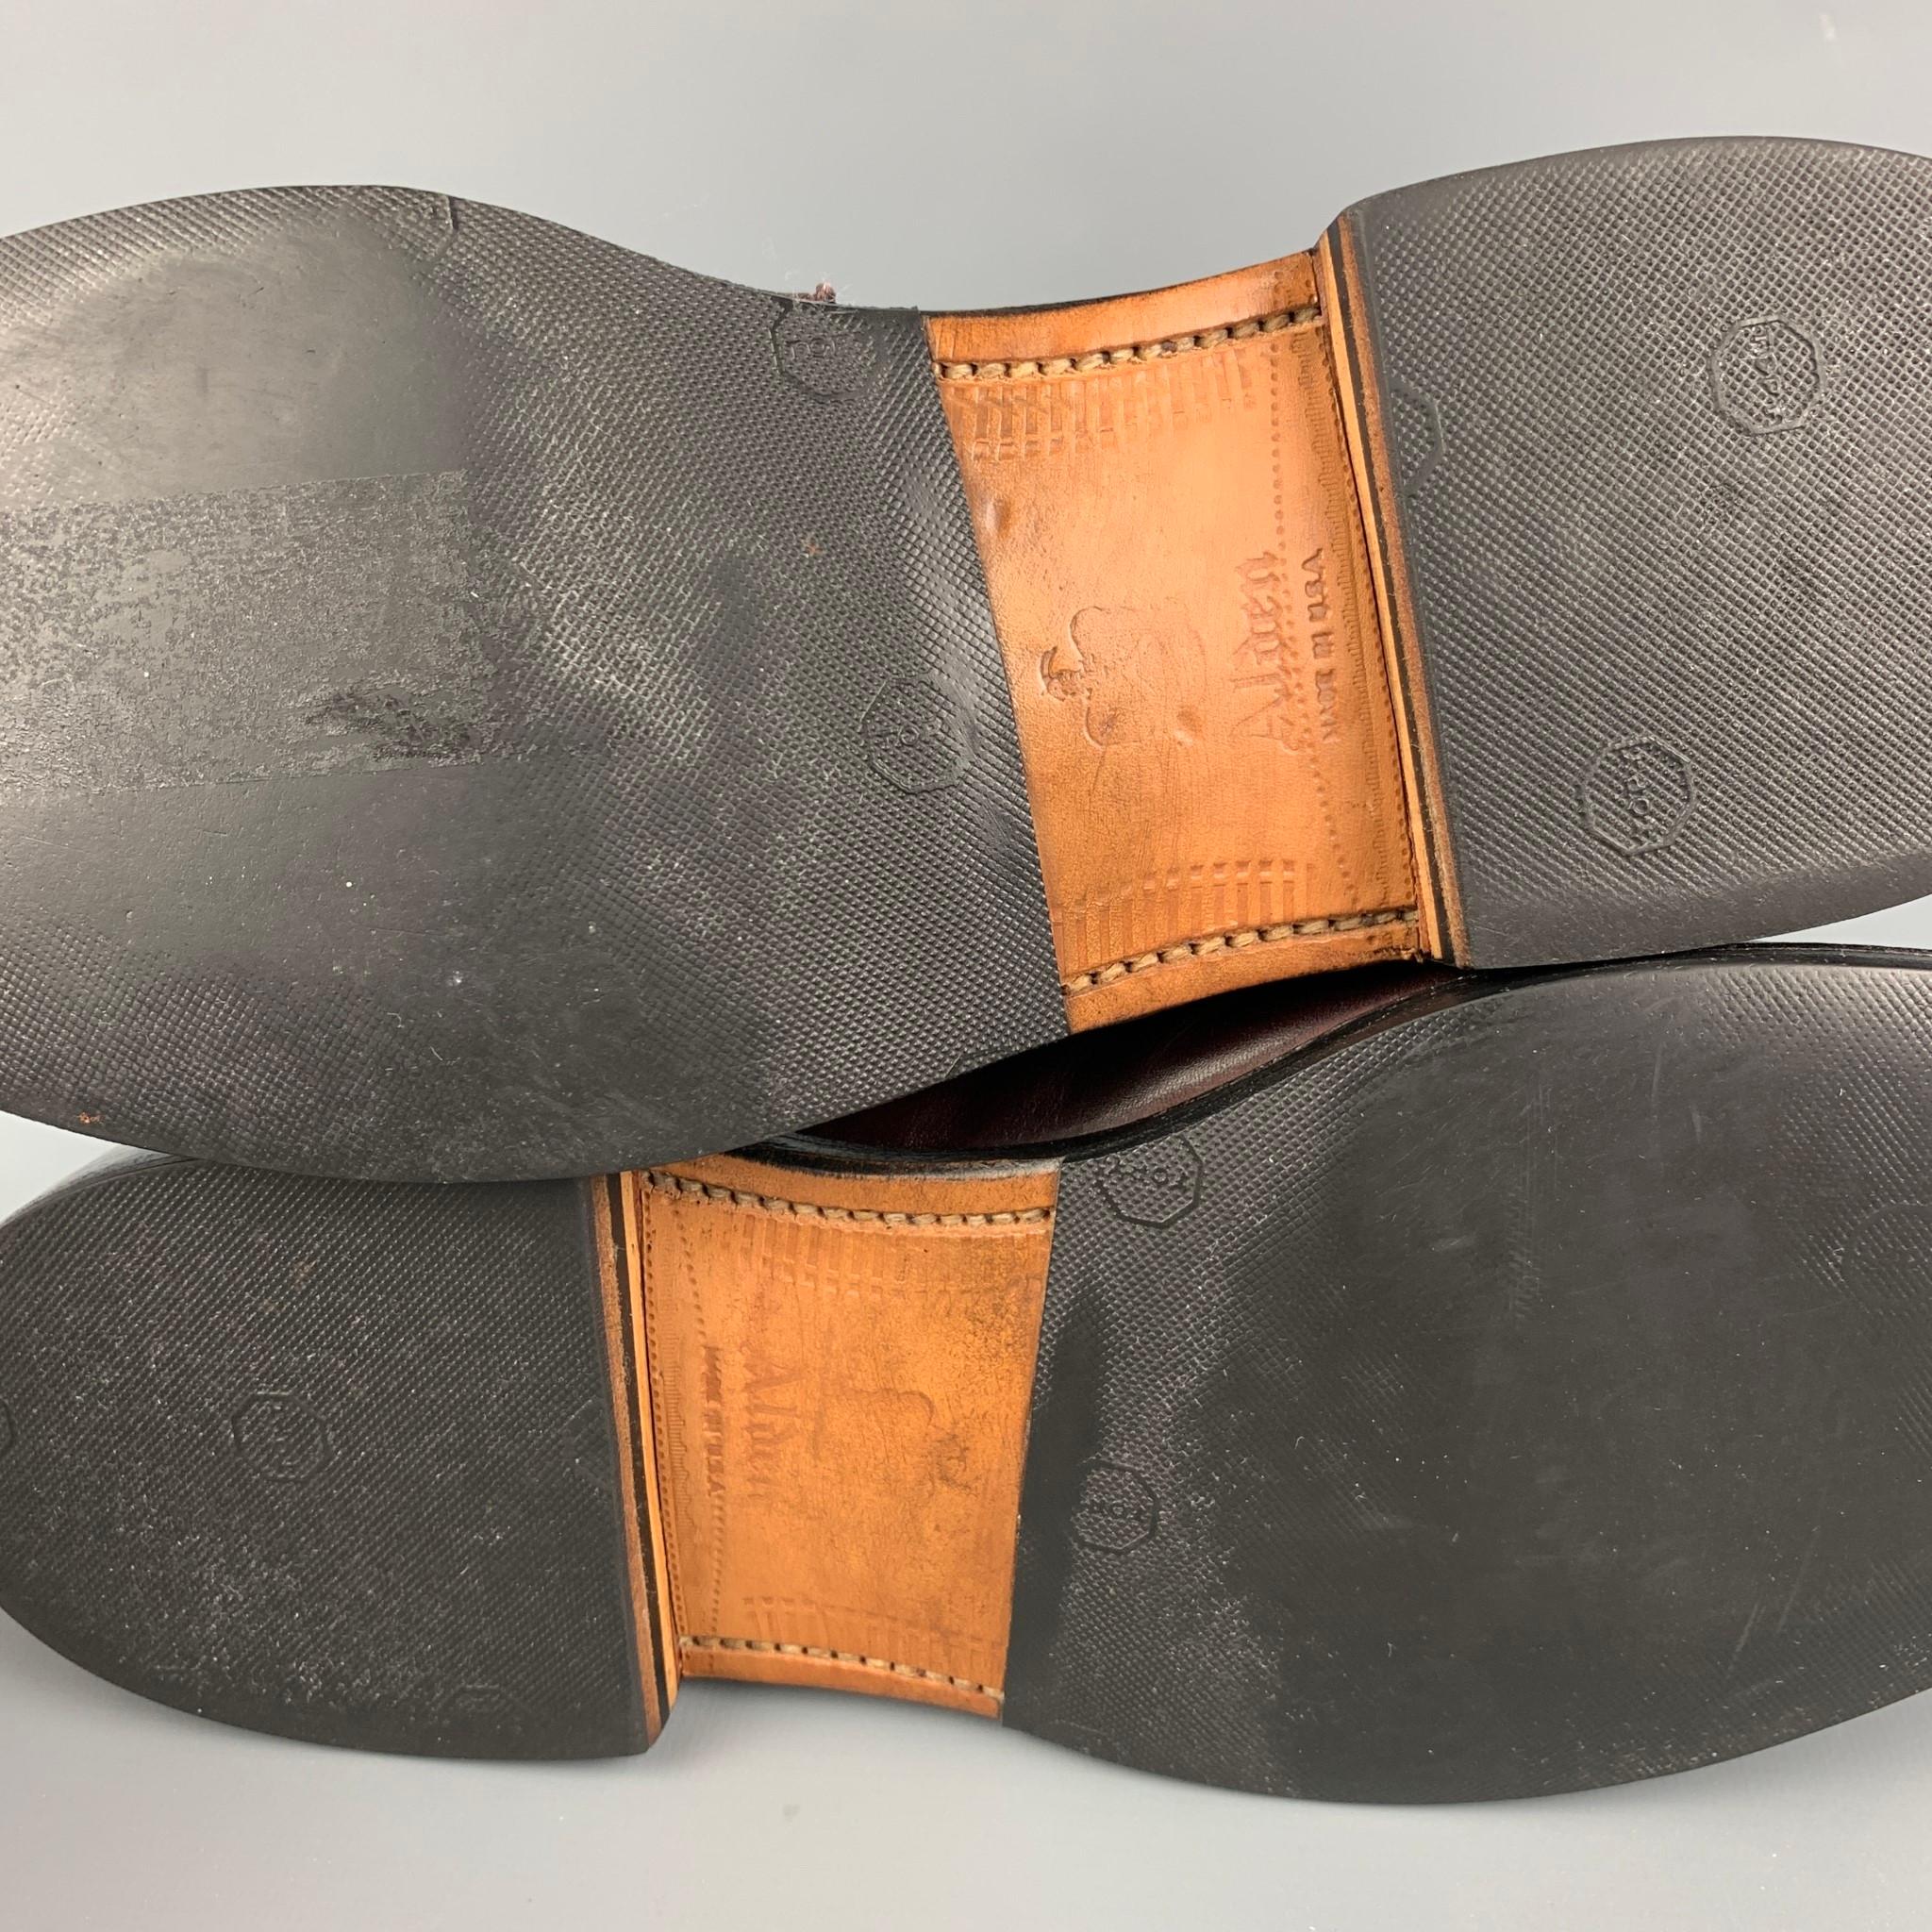 Men's ALDEN Size 6.5 Burgundy Leather Penny Loafers